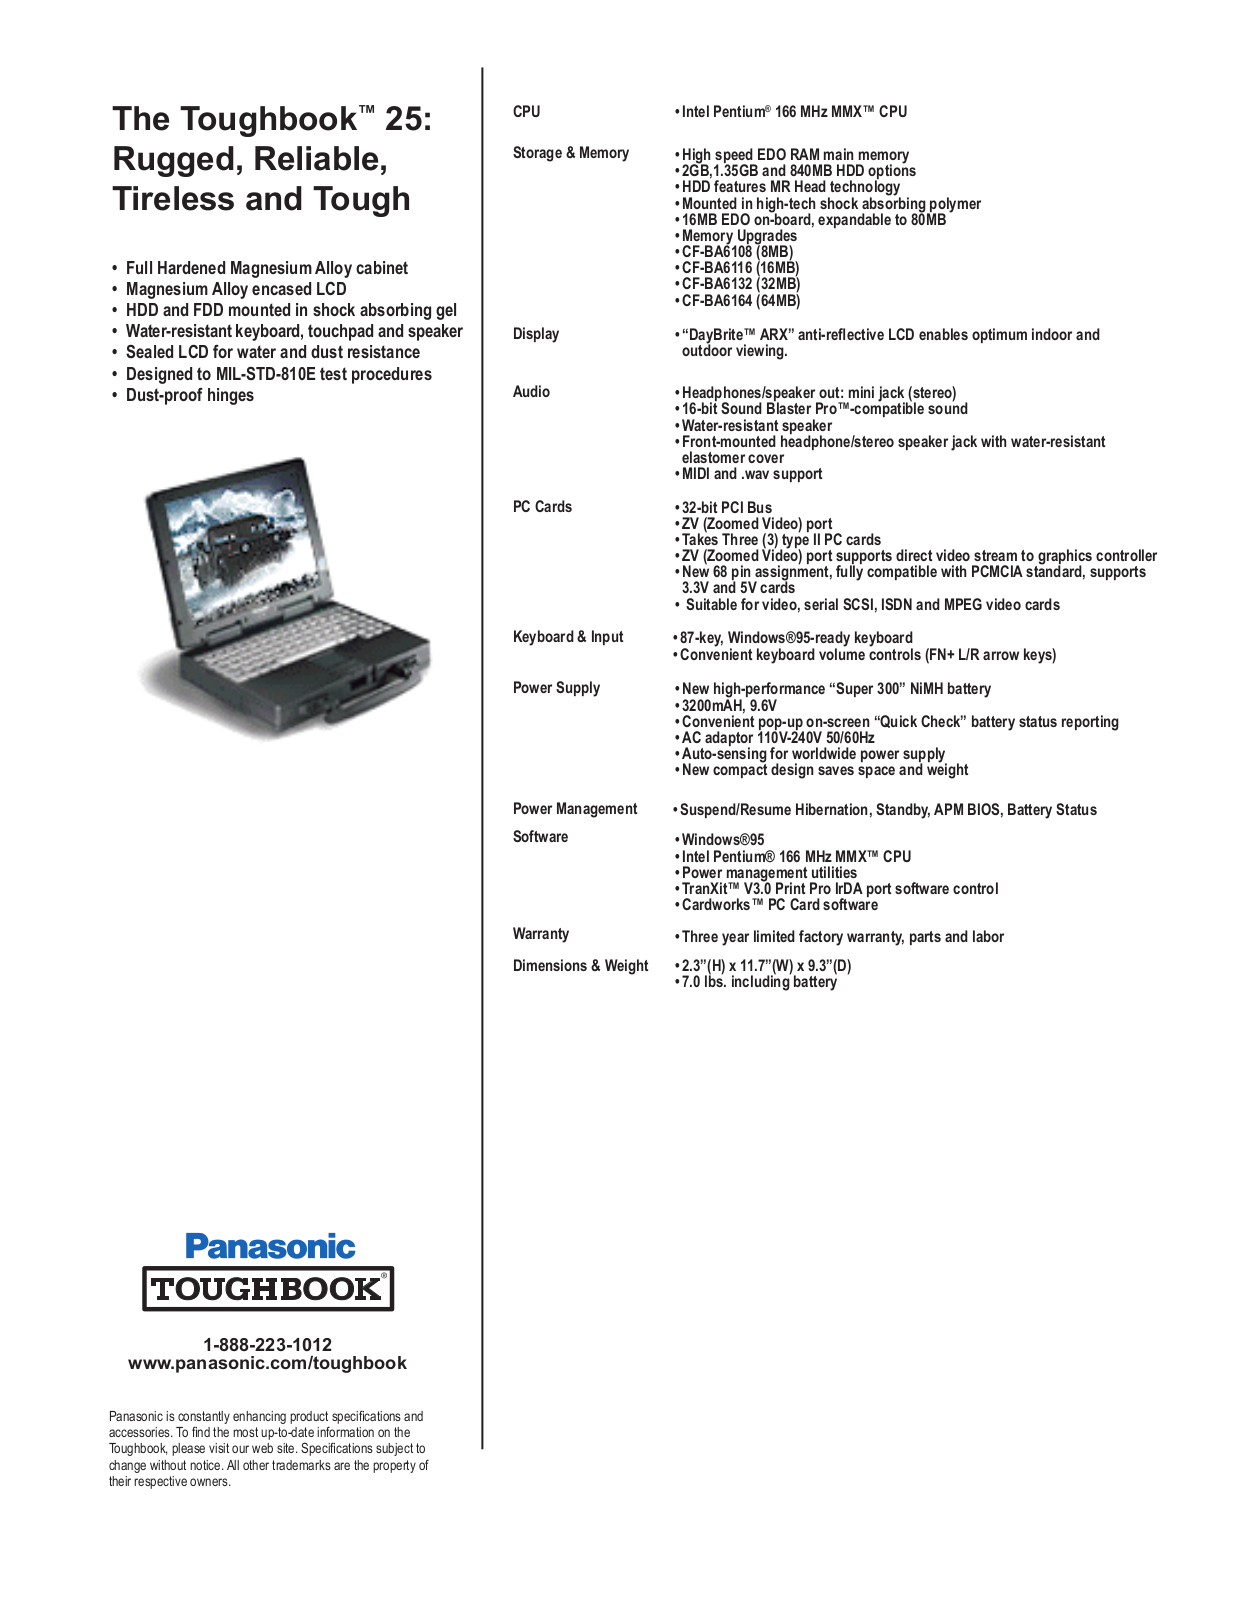 Panasonic Toughbook 25 User Manual